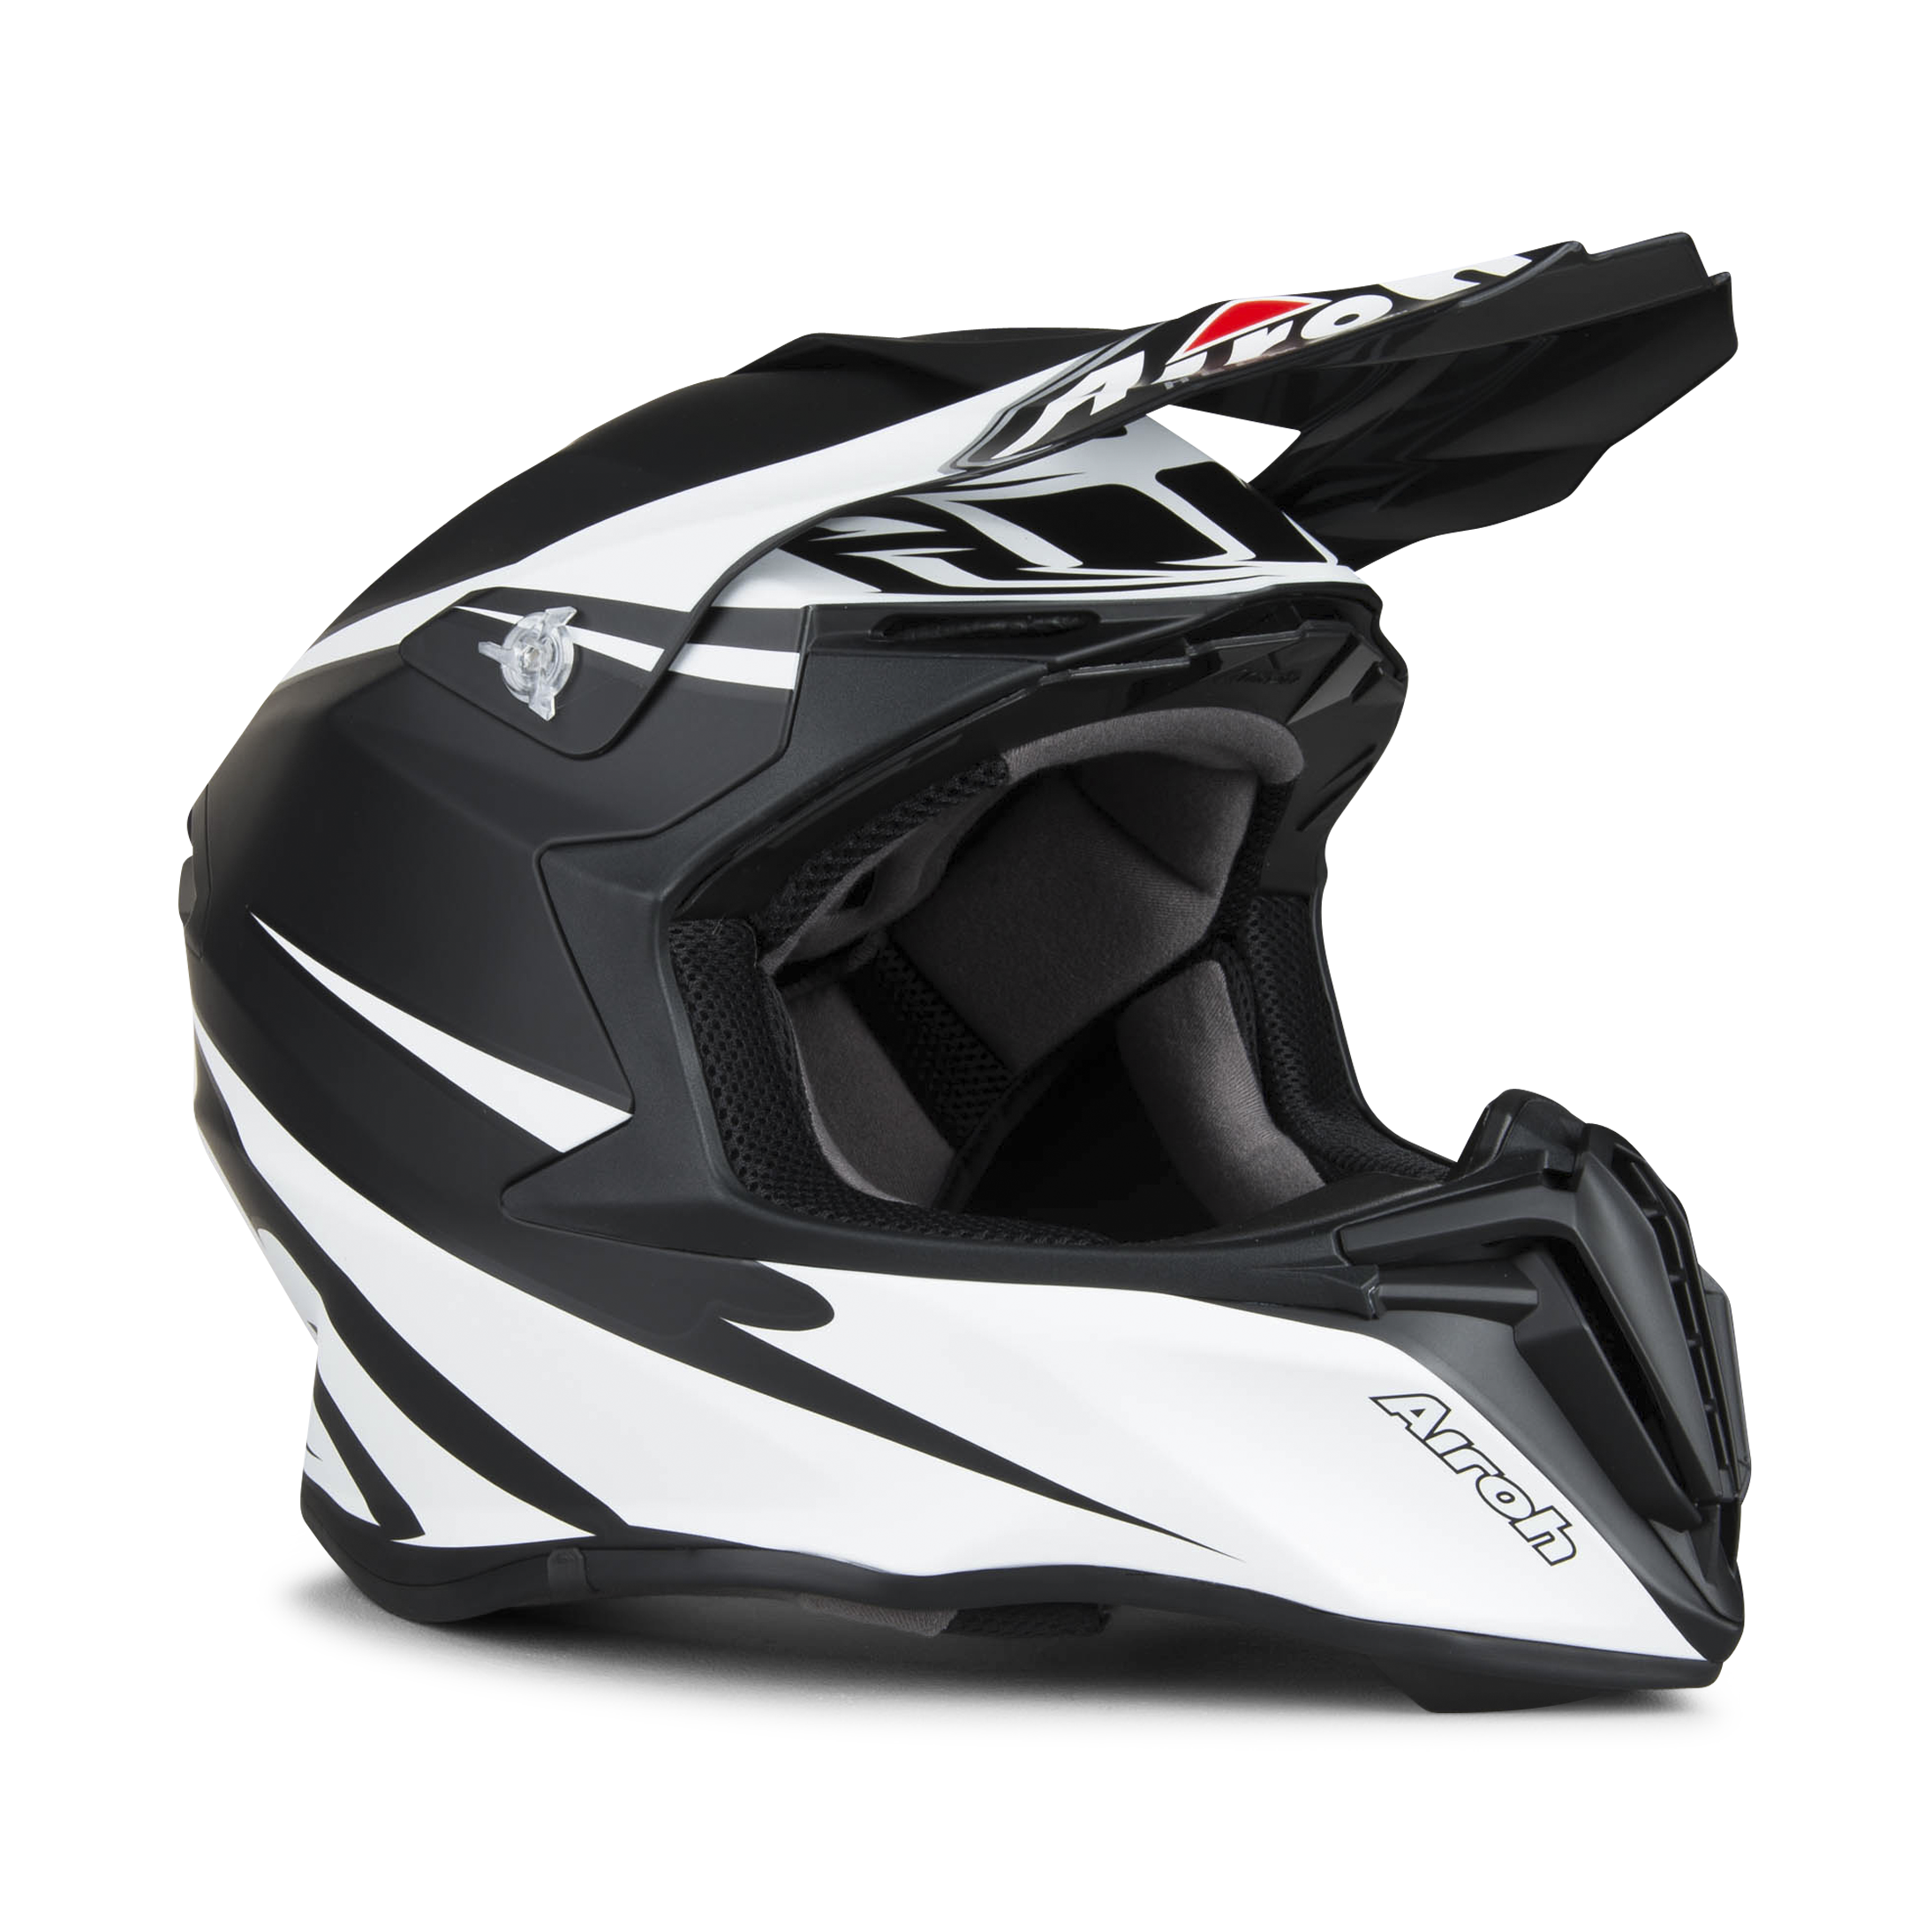 New 2019 Airoh Twist Freedom Crazy Helmet Motocross Enduro S M L XL Road Legal 